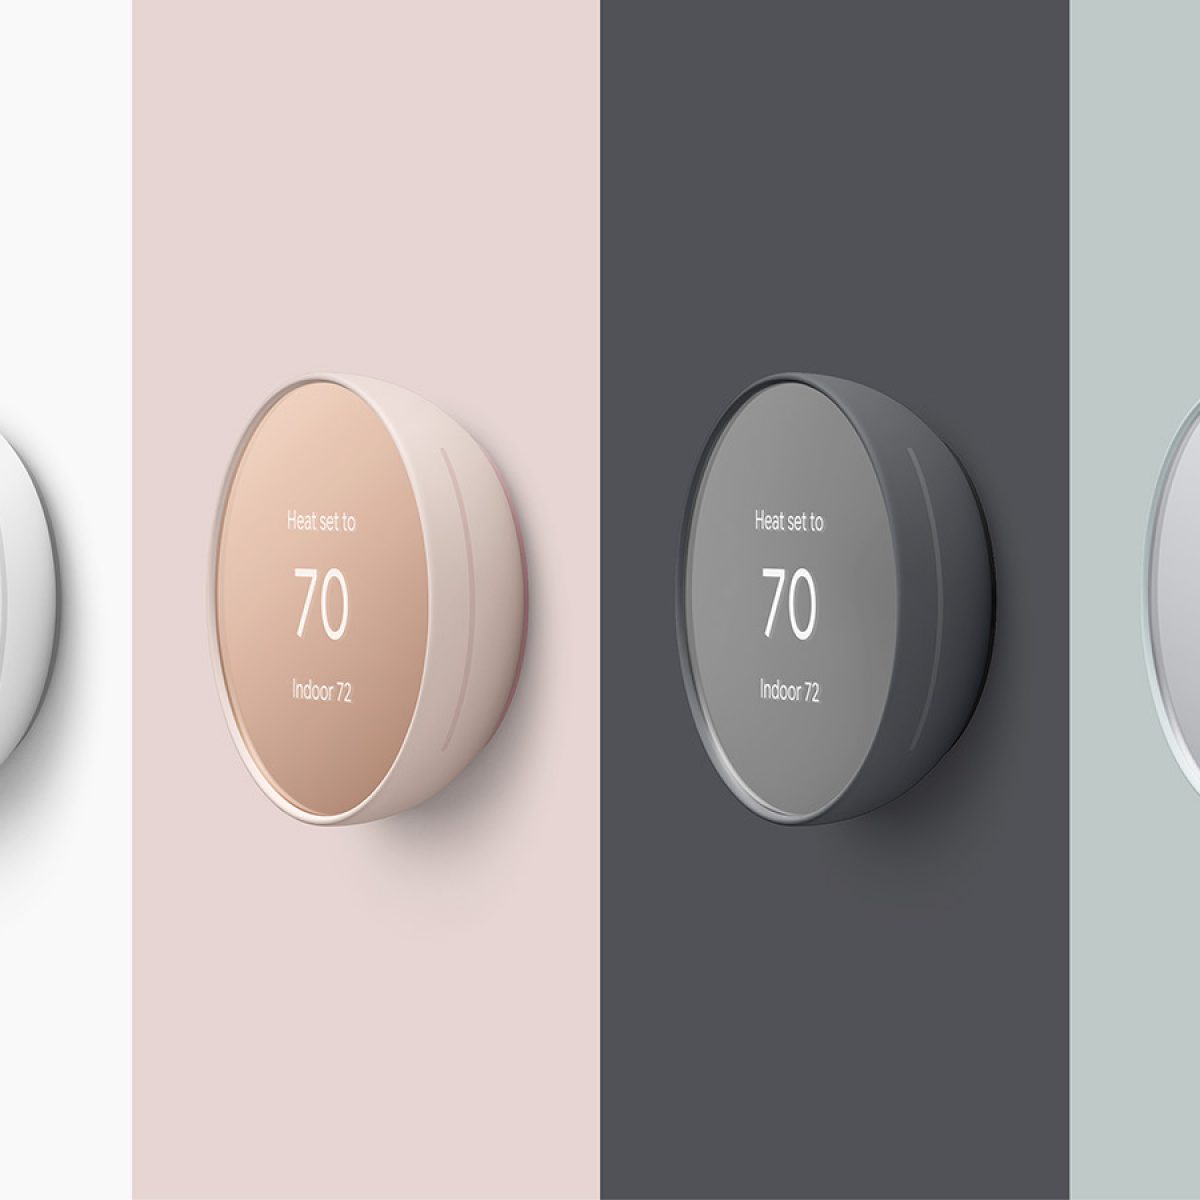 Google Nest Thermostat (Fog)